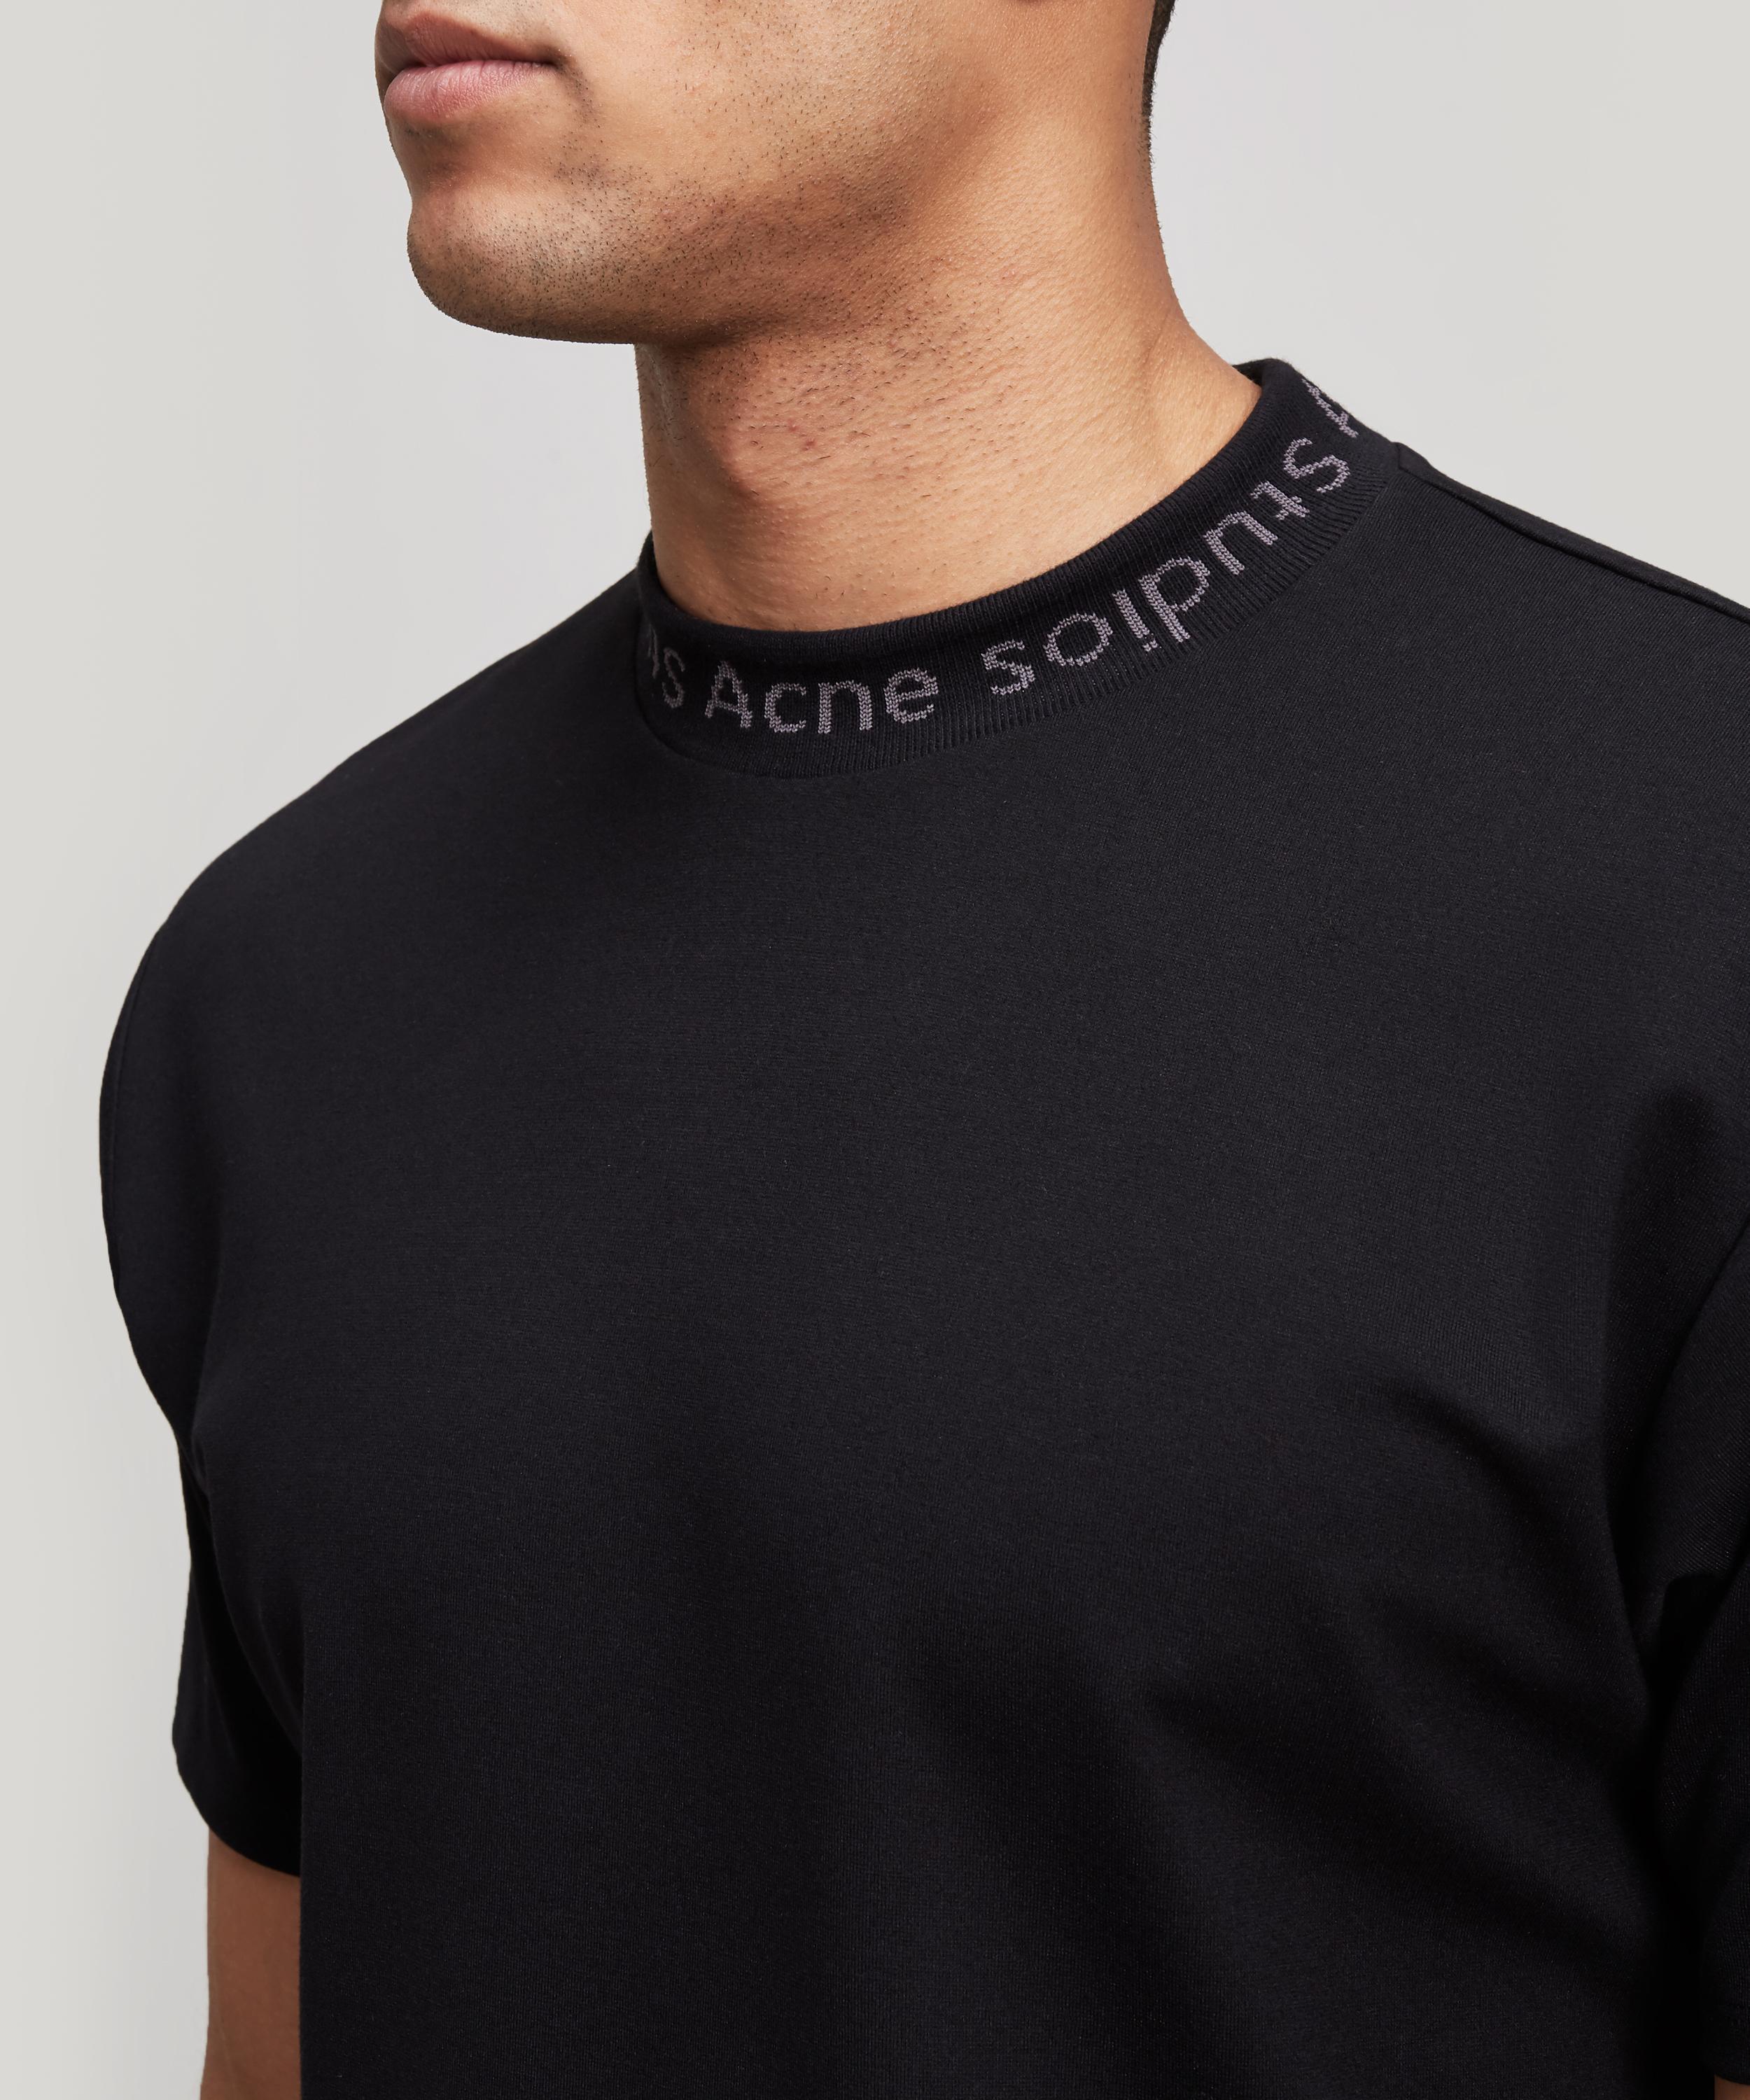 Acne Studios Navid Logo Ribbed Cotton T-shirt in Black for Men - Lyst